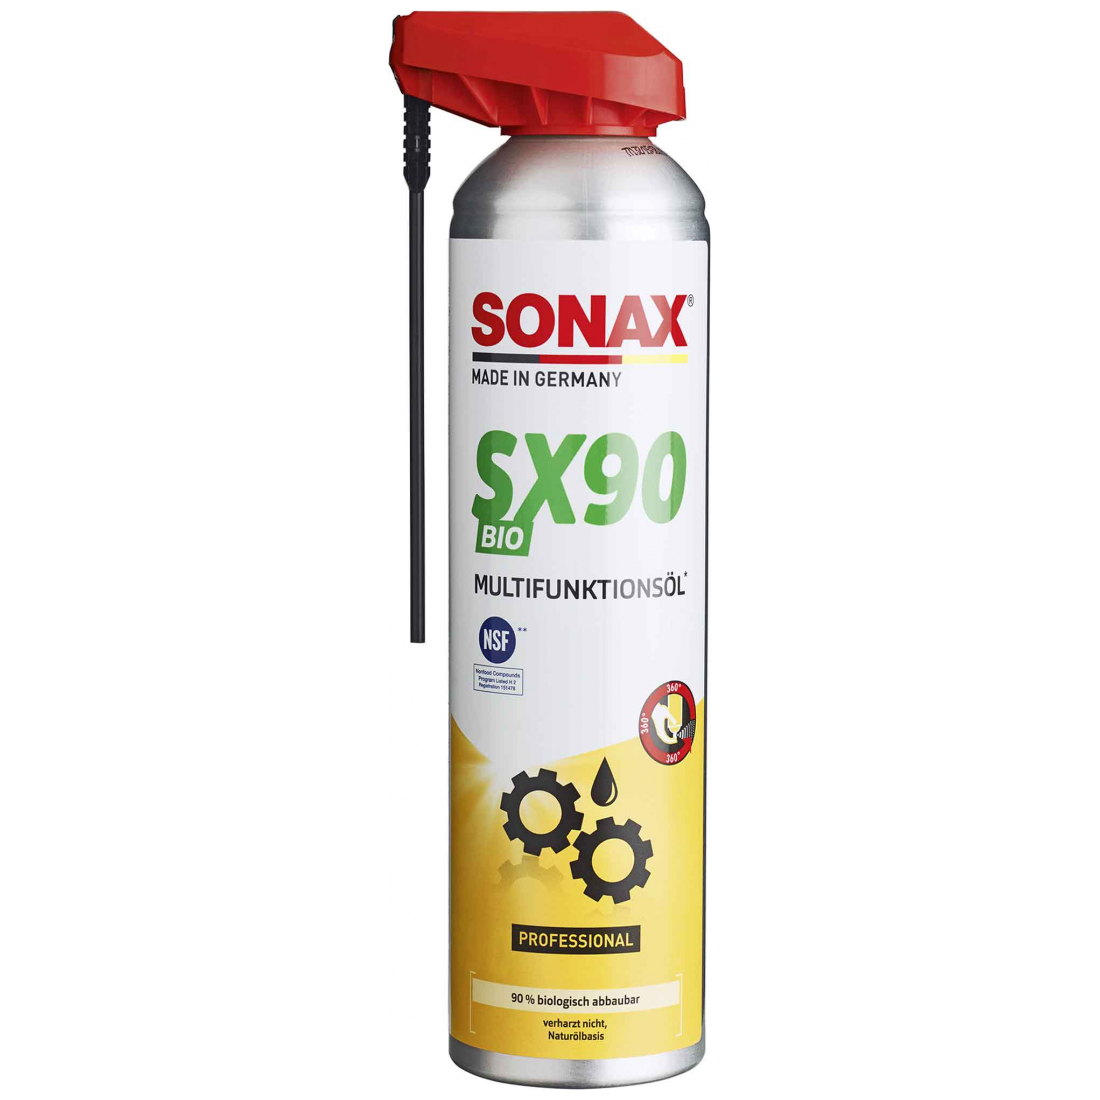 SONAX SX90 BIO m. EasySpray Multifunktions-Öl 300 ml